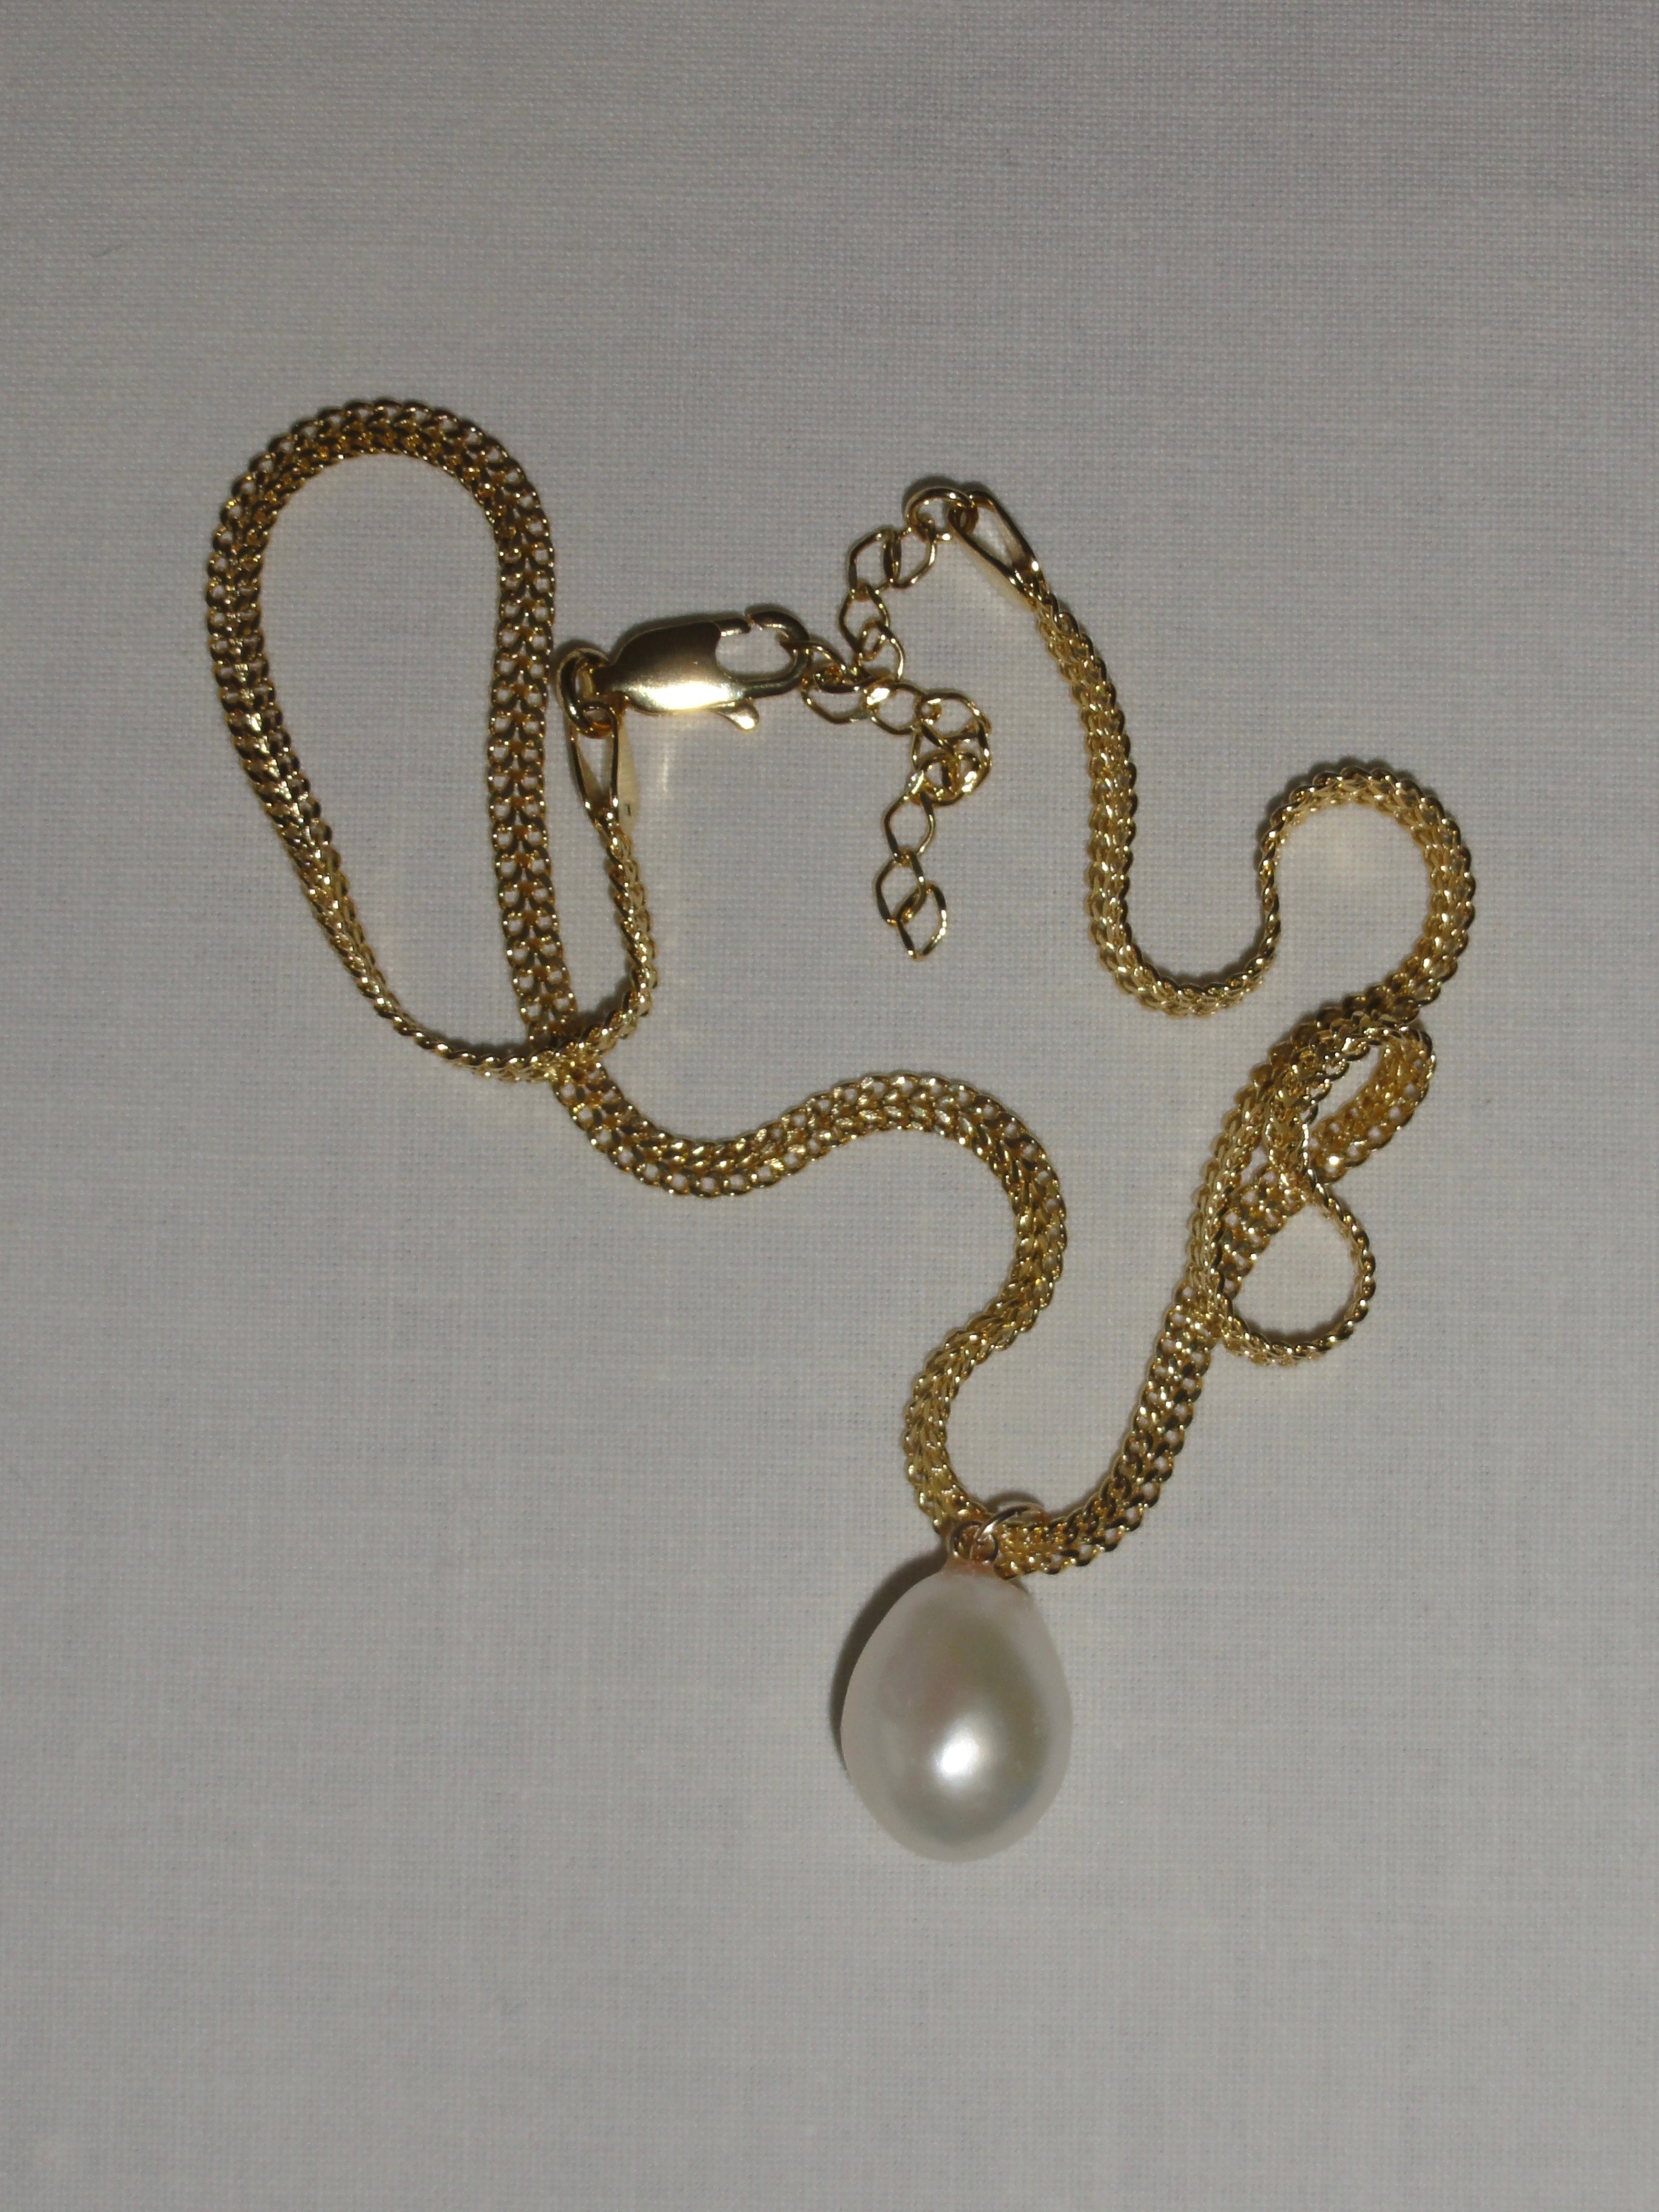 Darya necklace